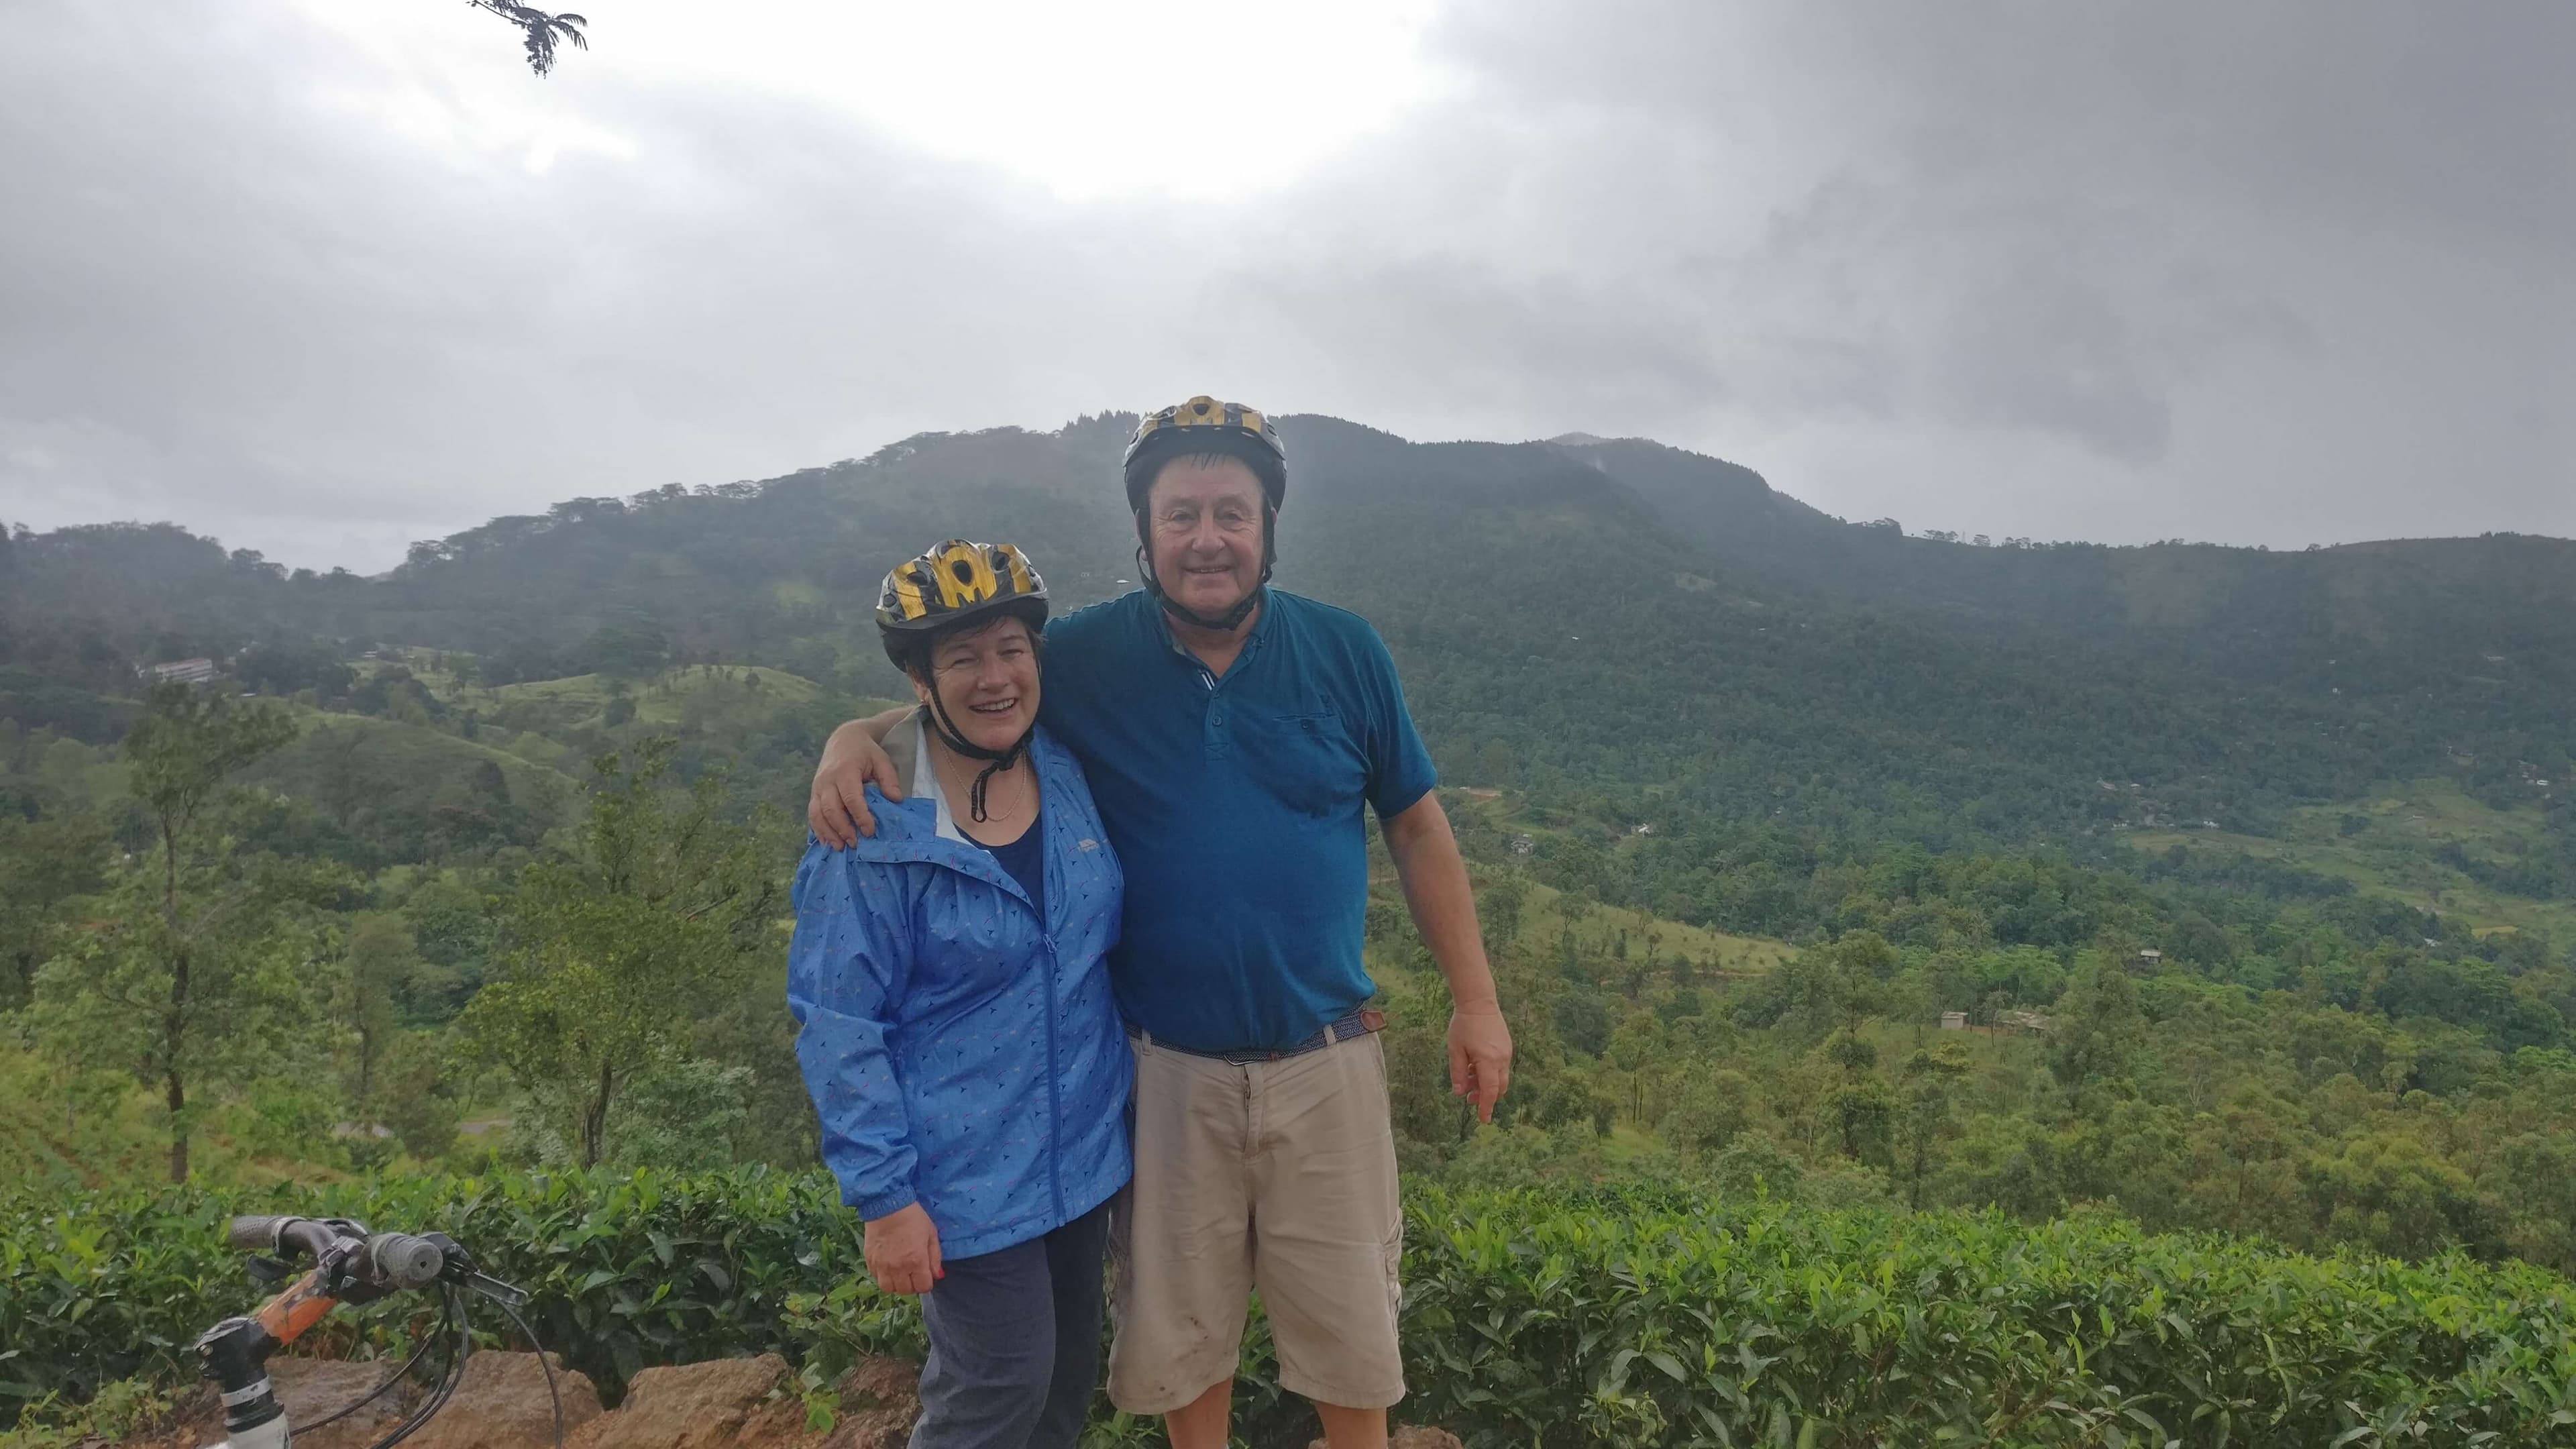 The cyclists take photo in the beautiful tea State in Sri Lanka